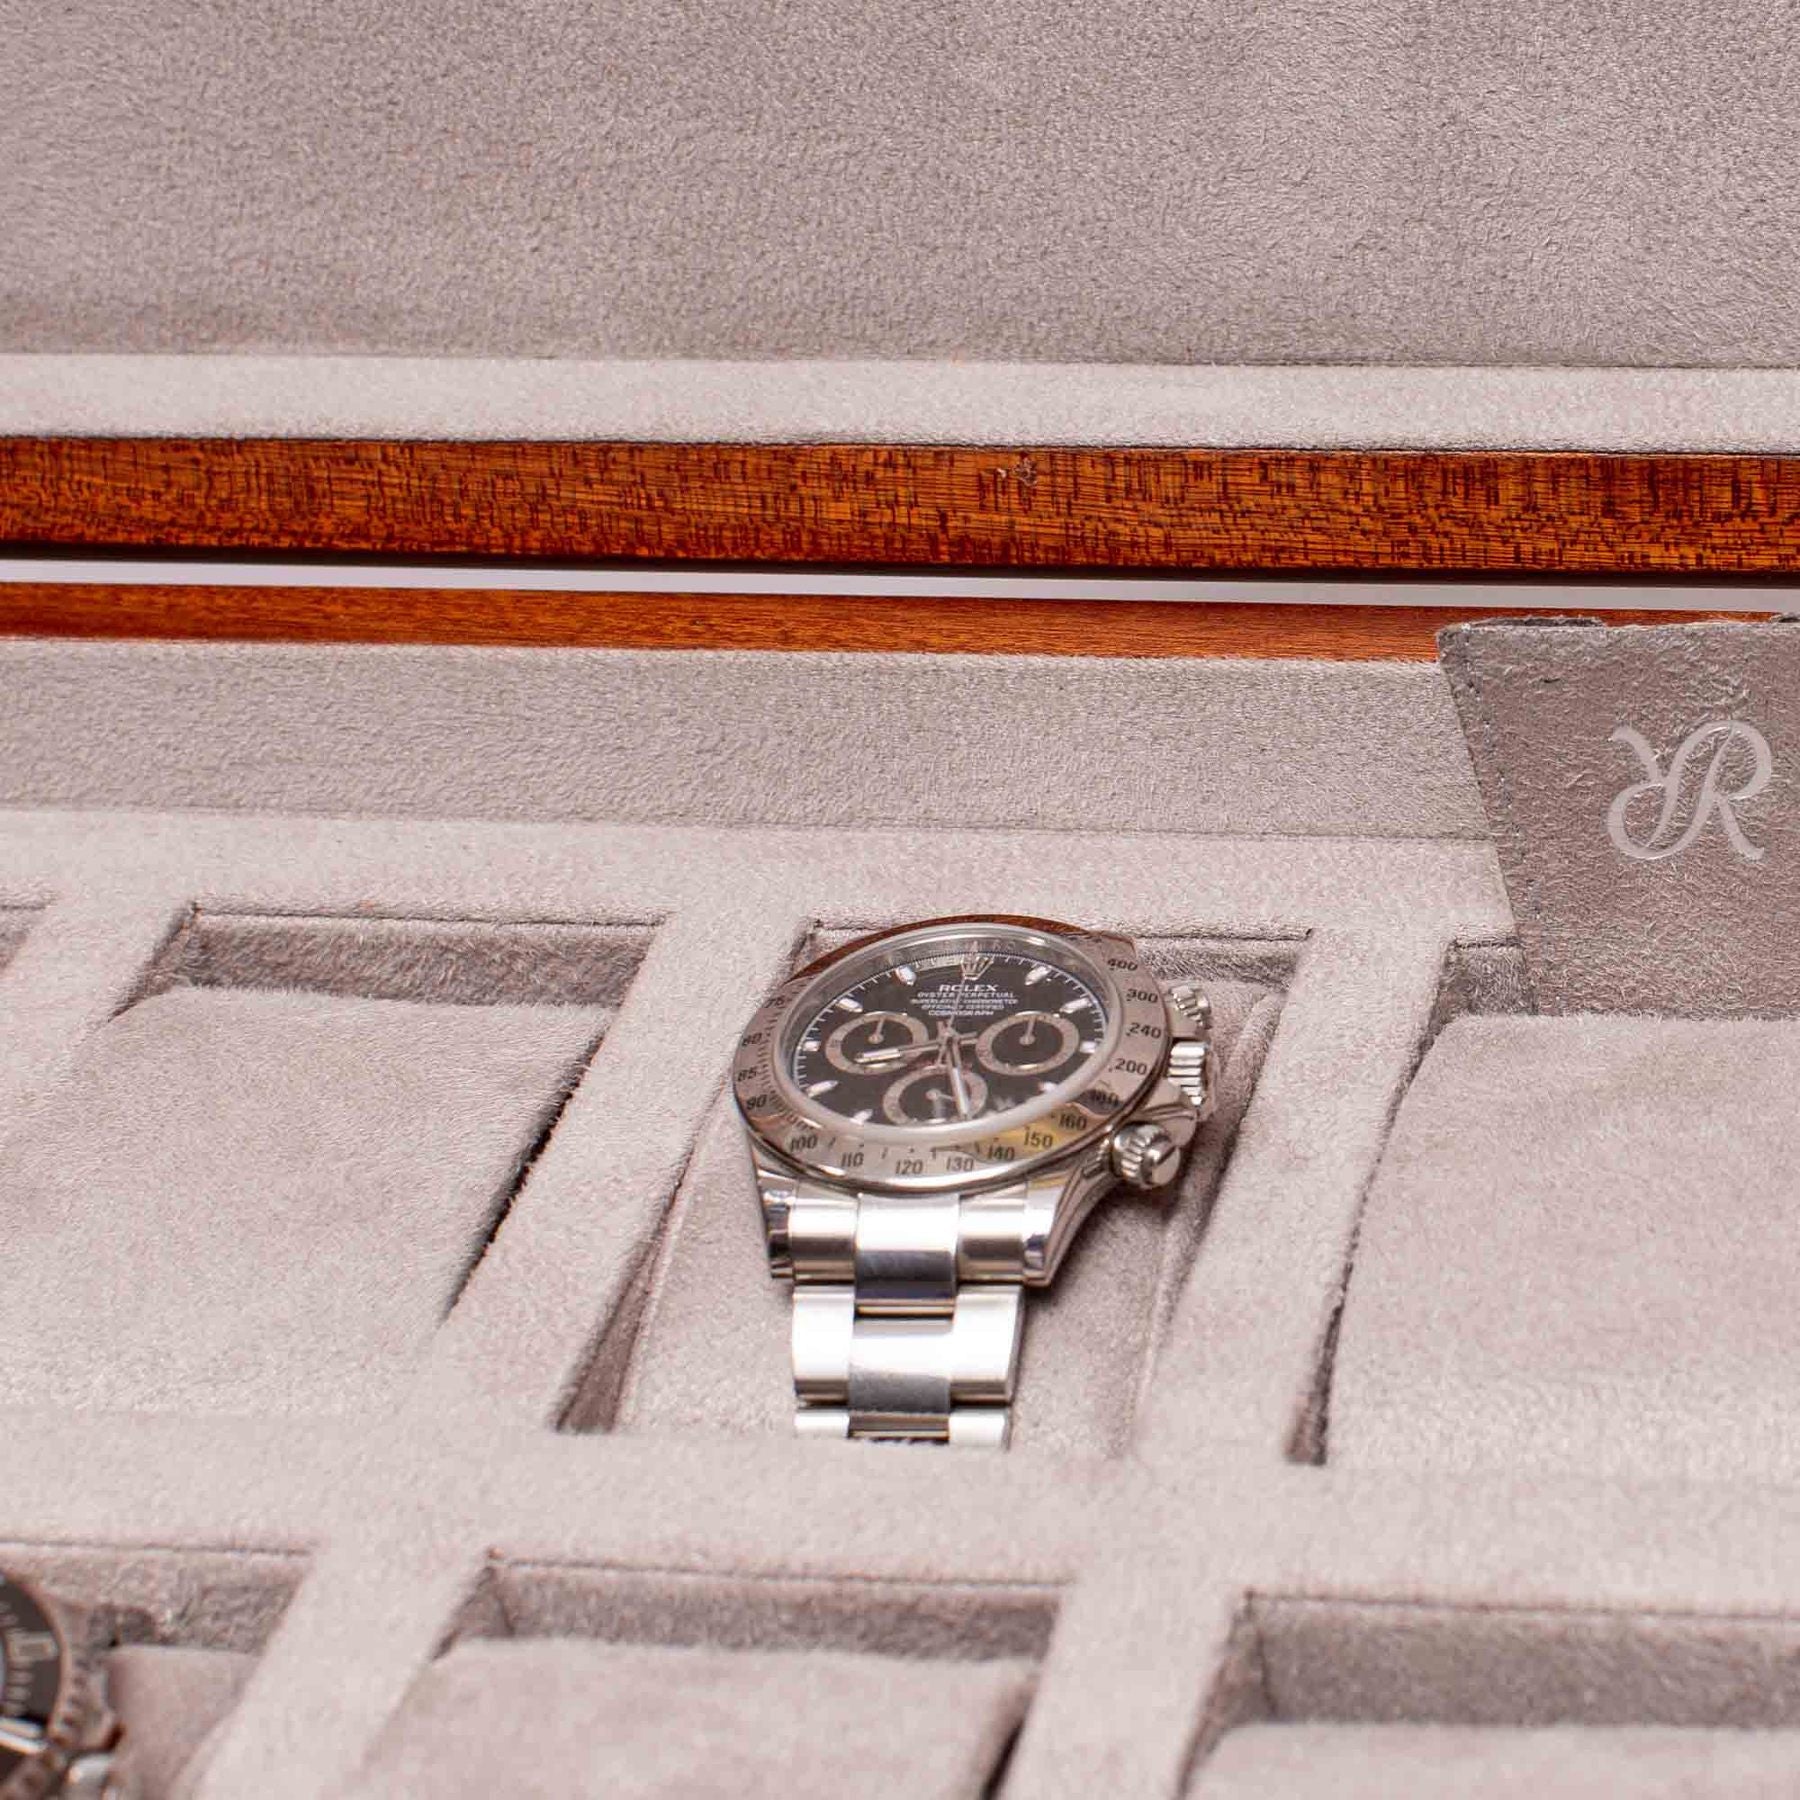 Rapport Heritage Wood Watch Box in Grey L416 - Watchwindersplus